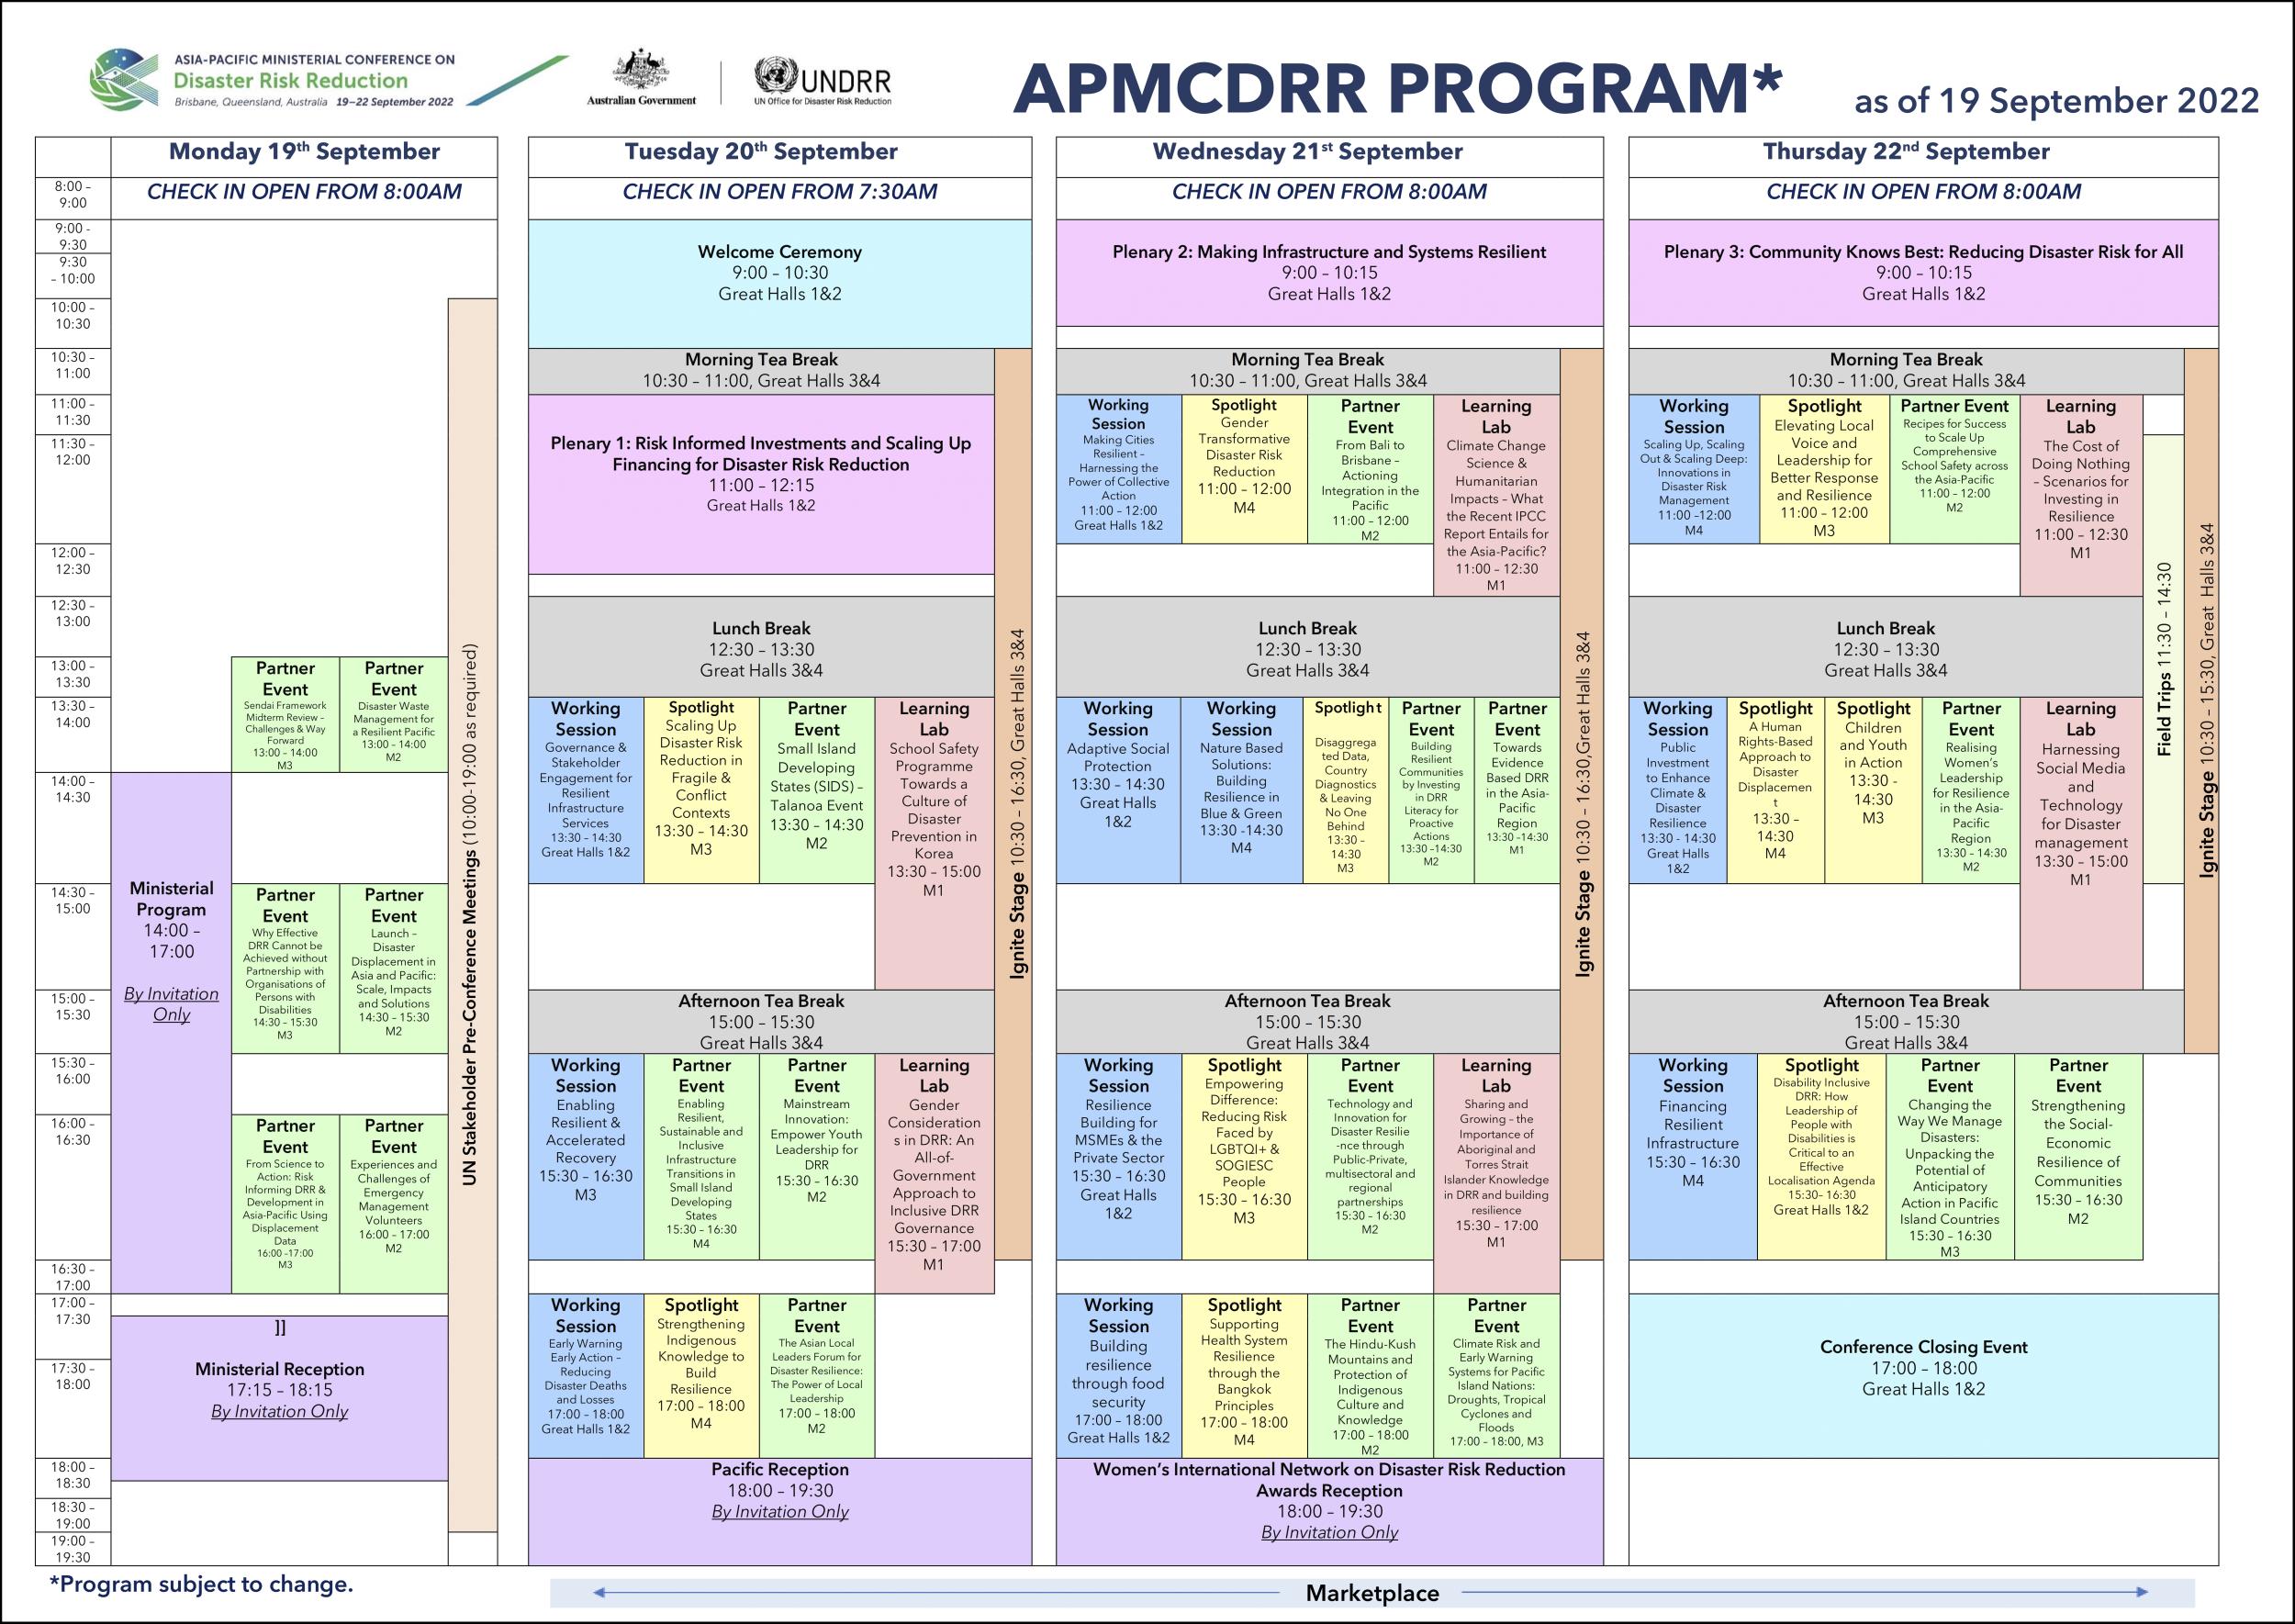 APMCDRR Program